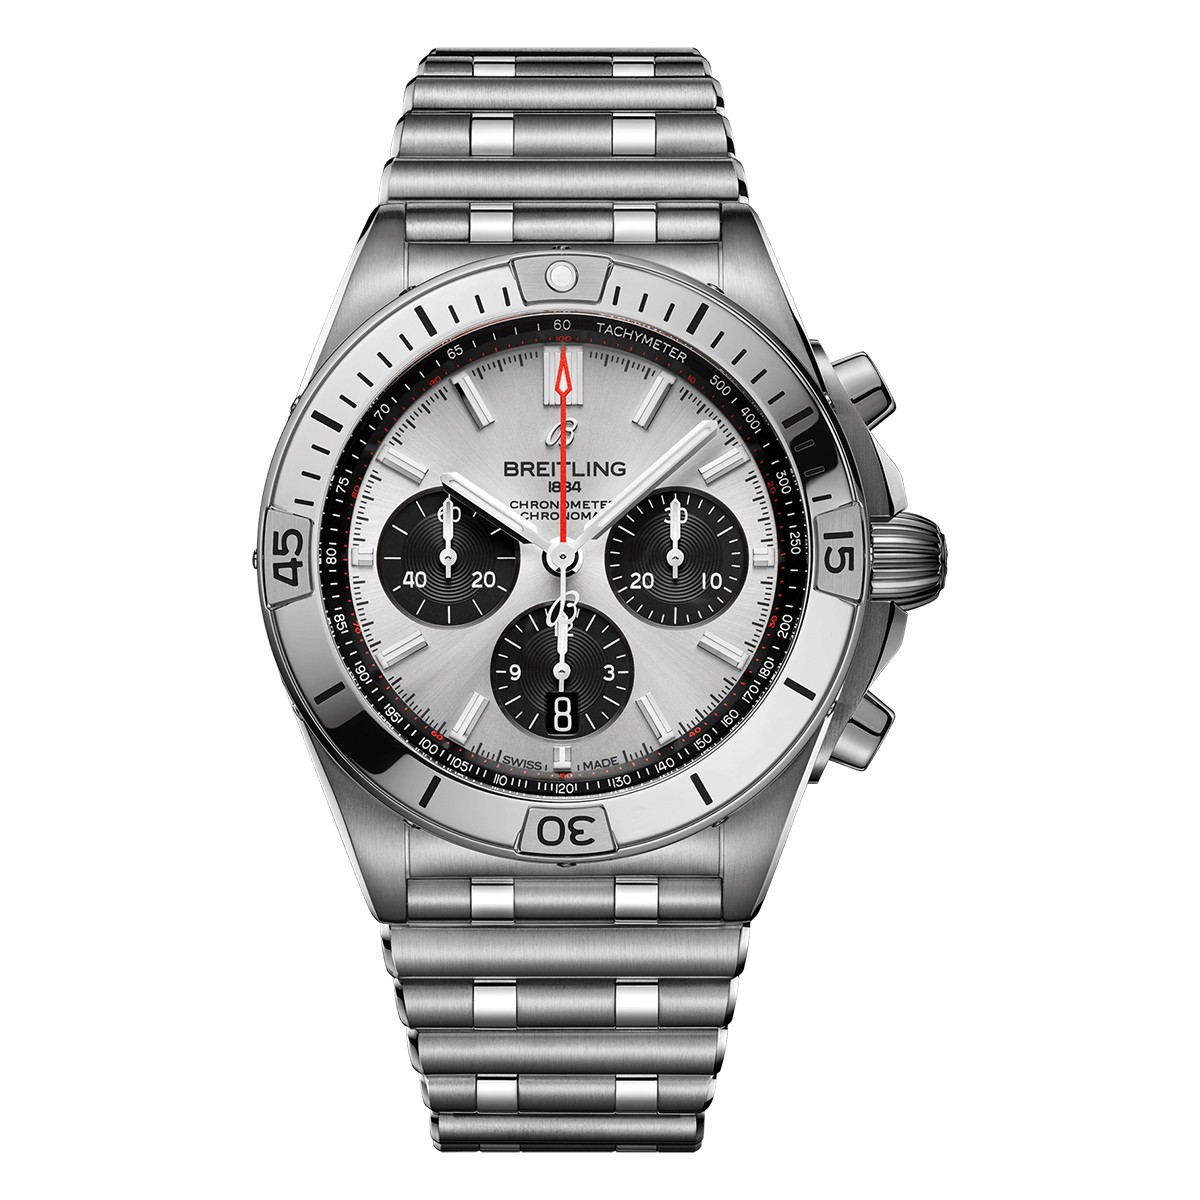 Breitling Chronomat B0142 watch